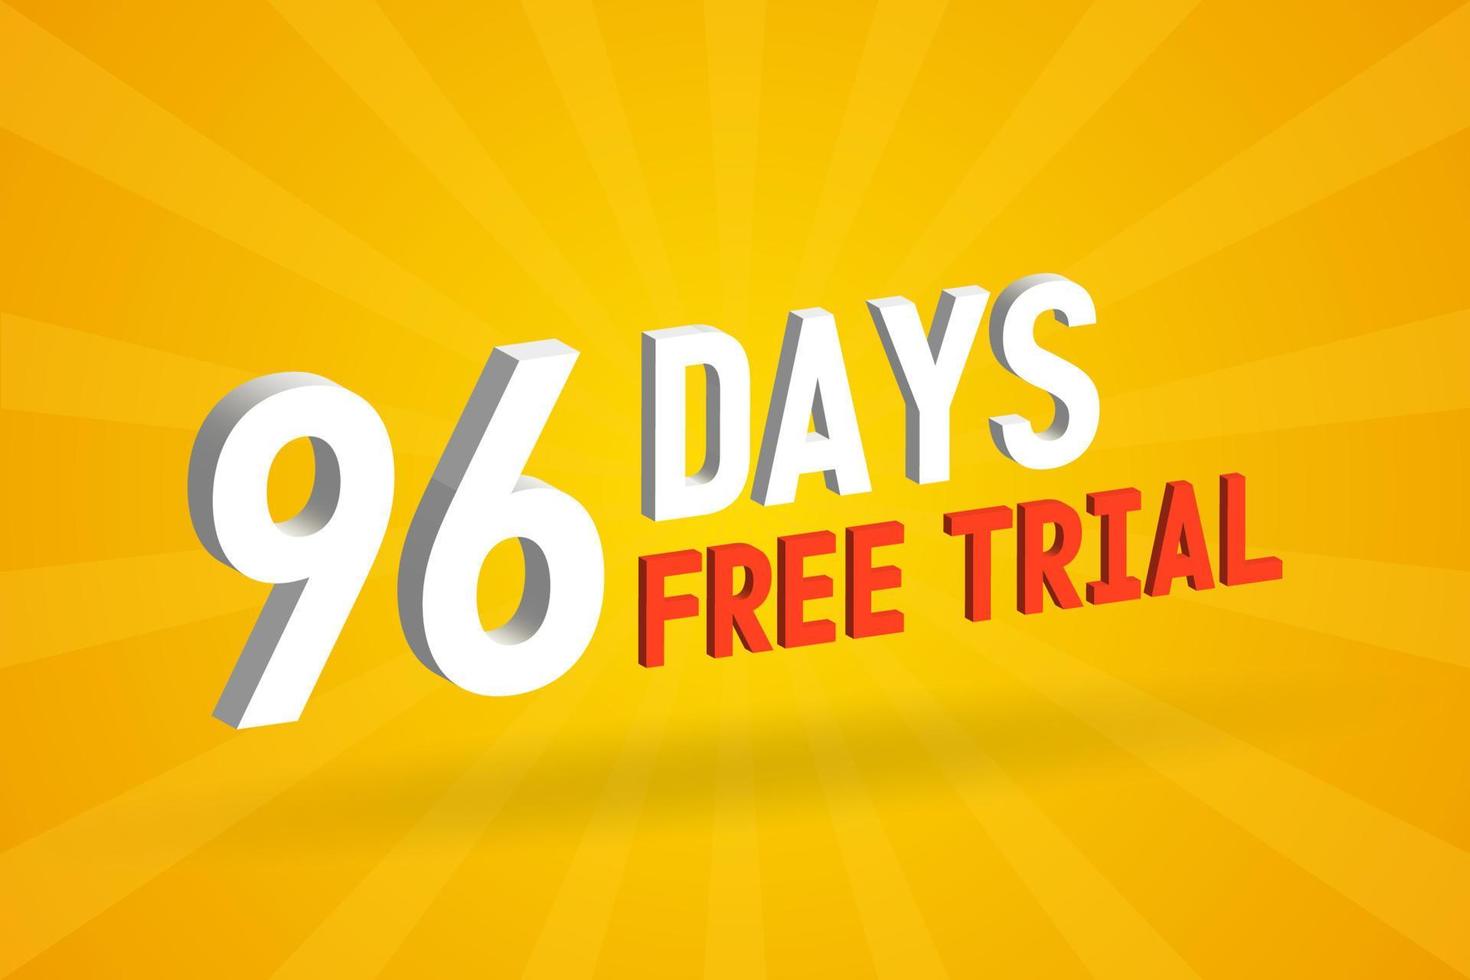 oferta gratuita 96 días de prueba gratuita texto 3d stock vector